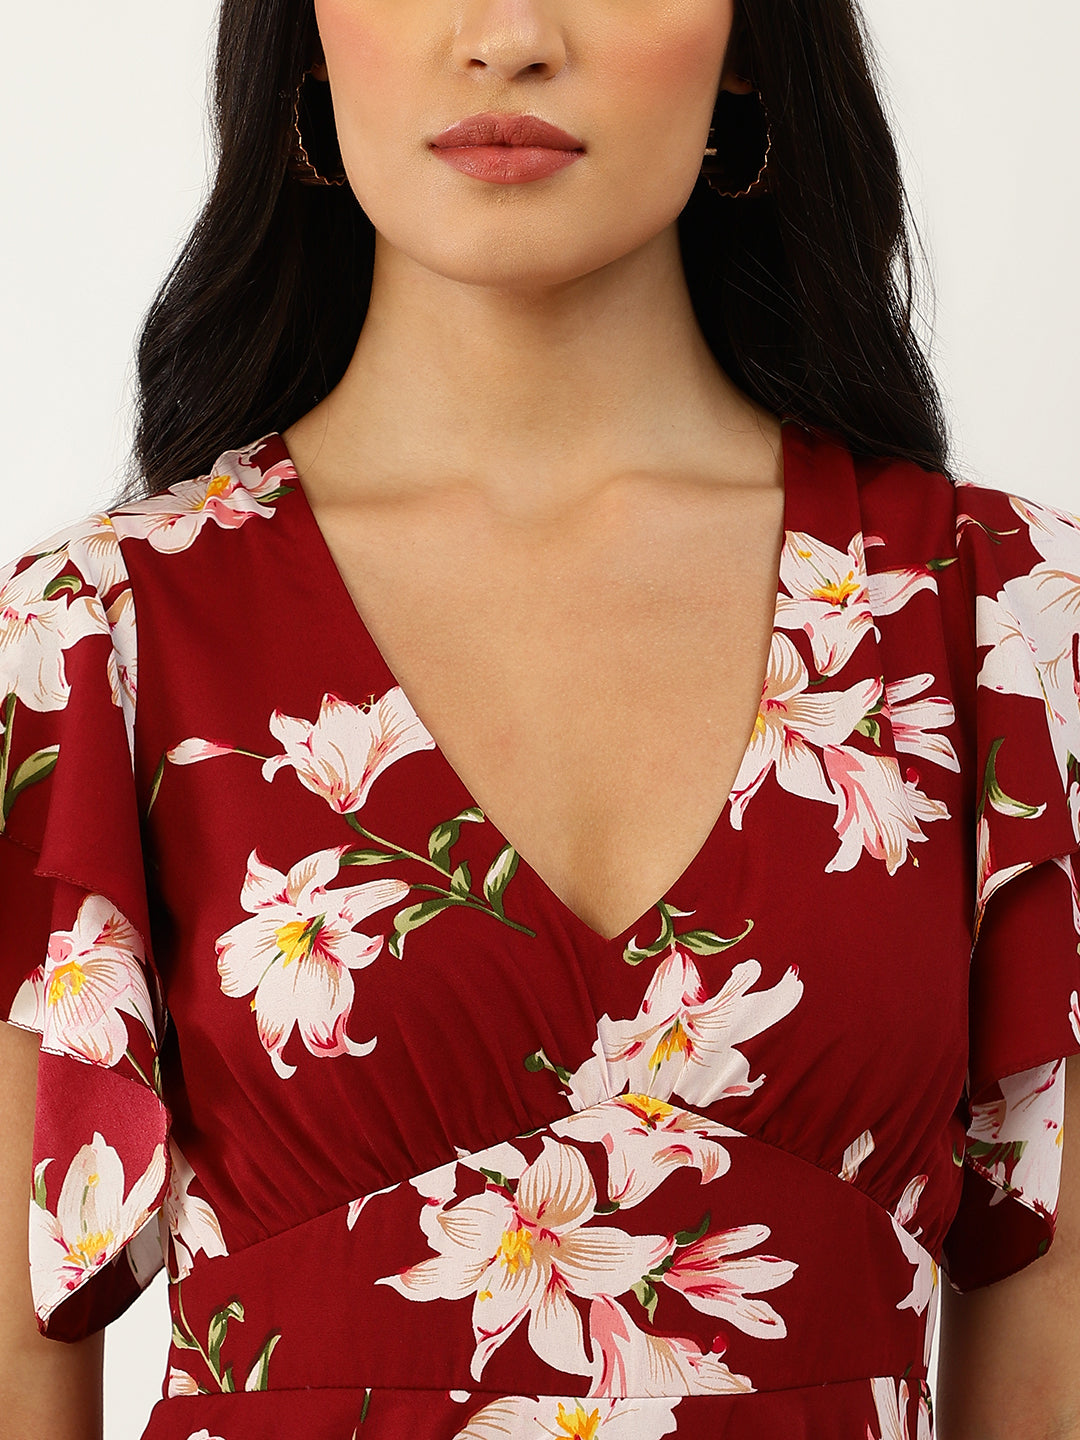 Maroon Floral Print Layered Maxi Dress